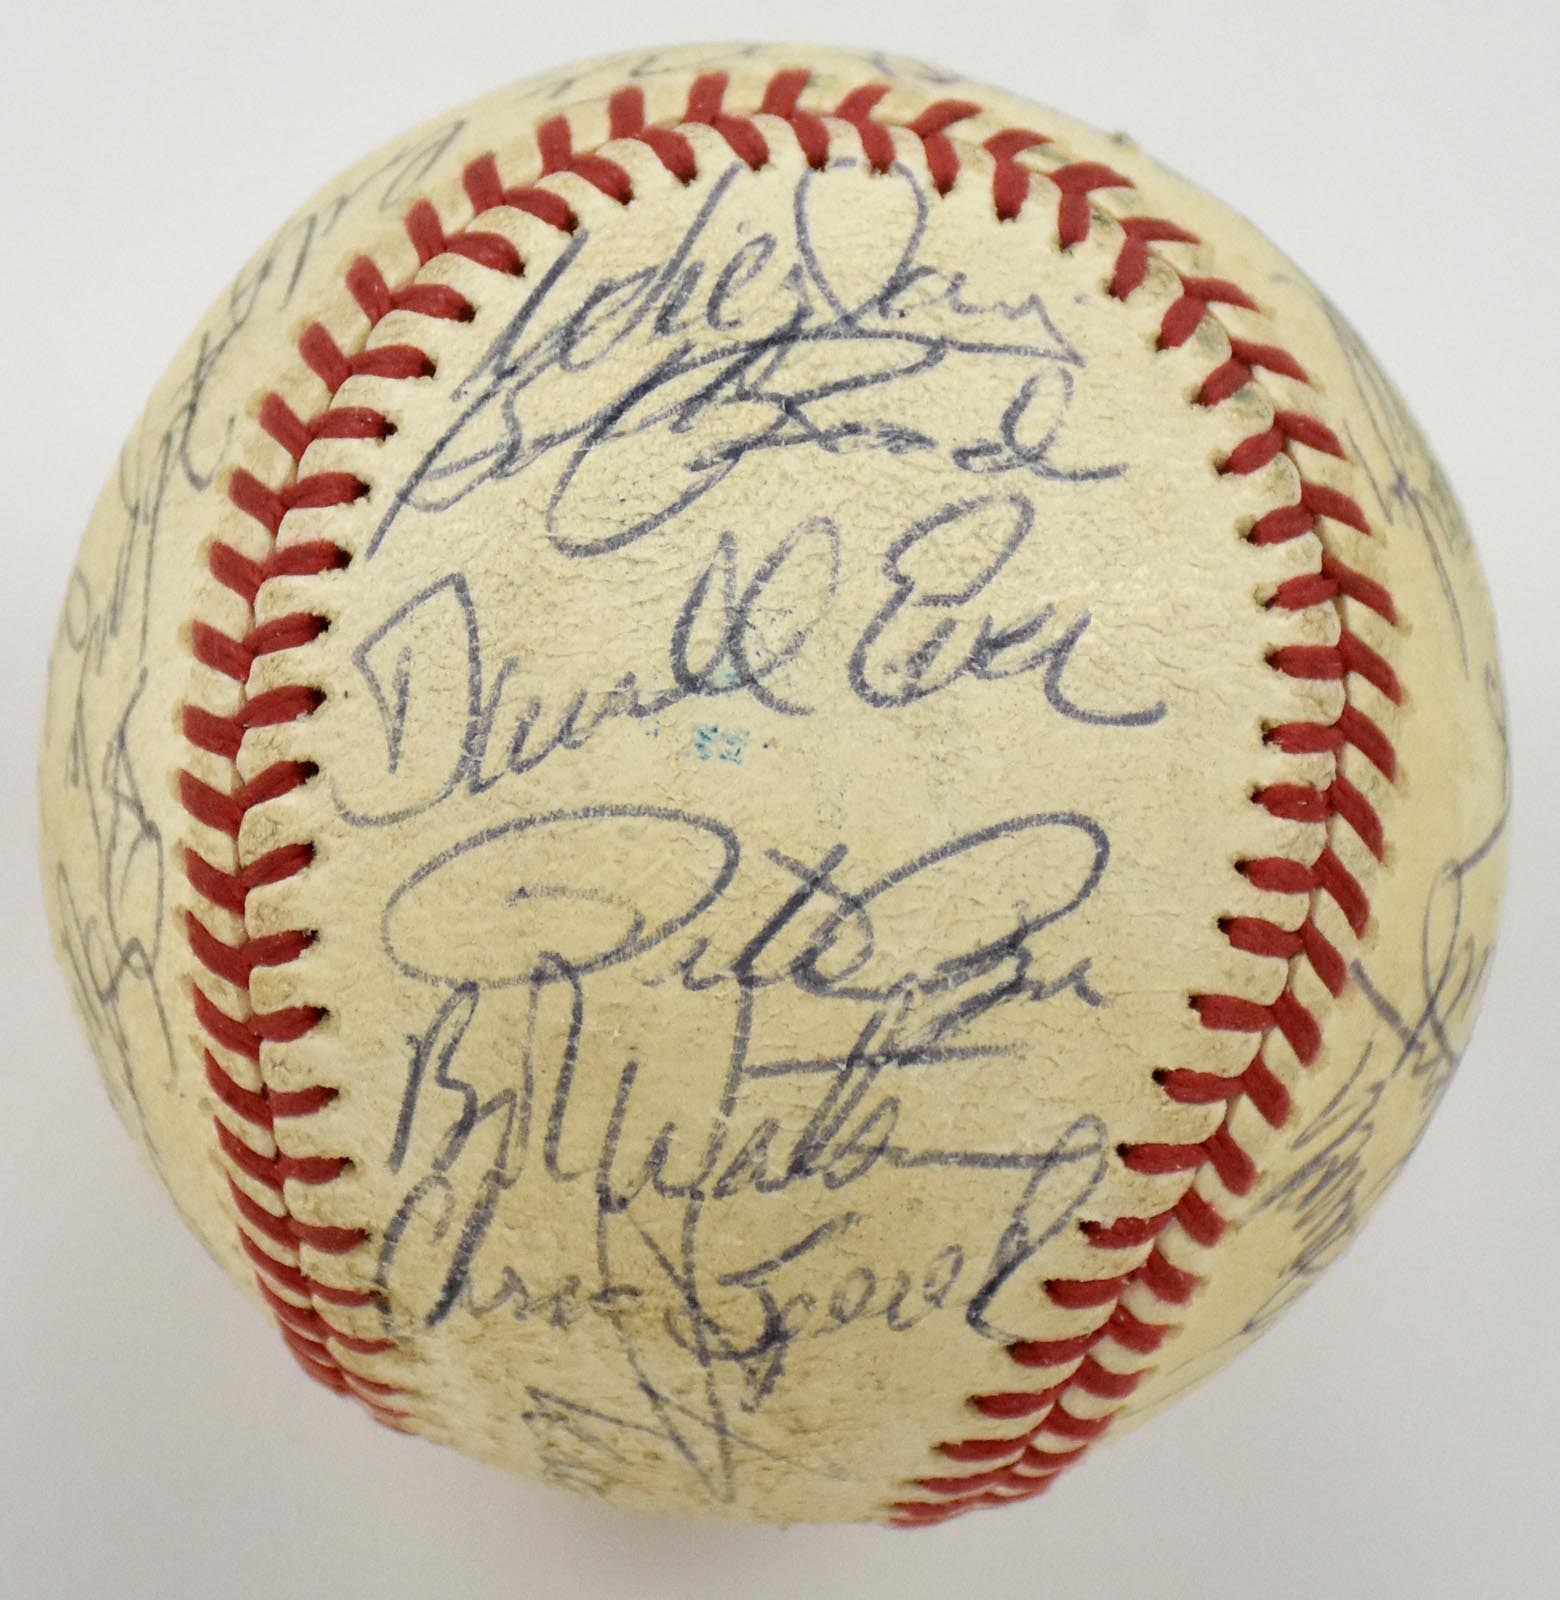 Baseball Autographs - 1973 National League All Star Game Signed Baseball